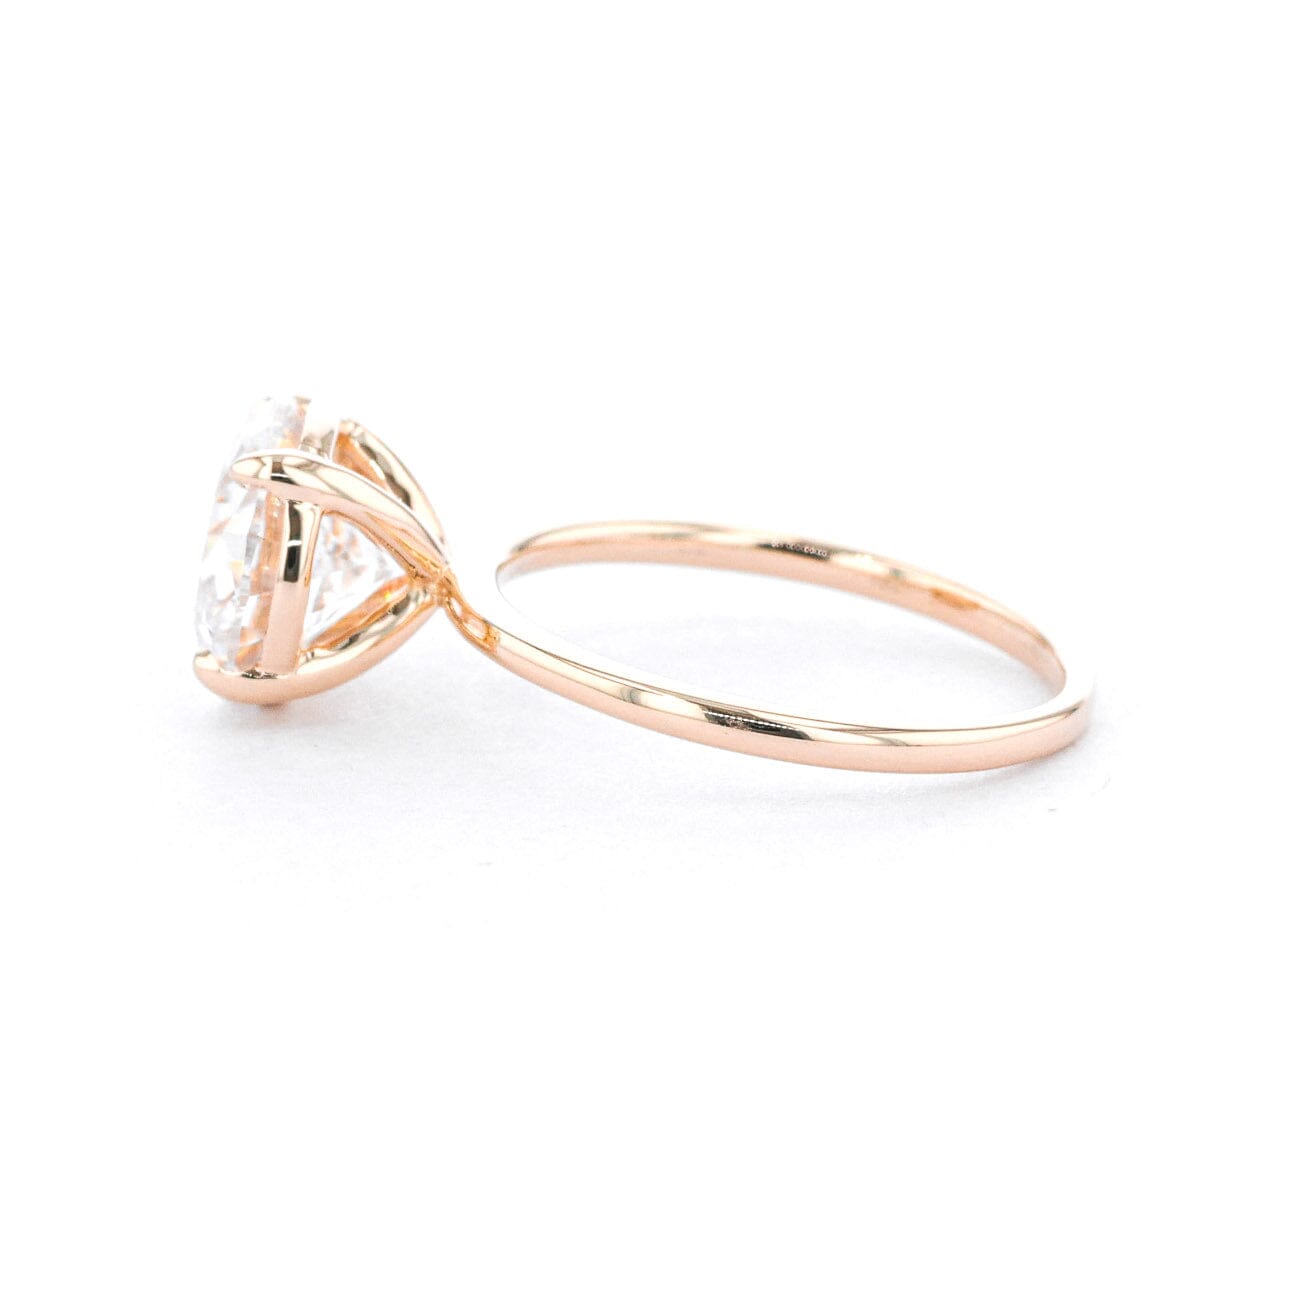 1.6mm Leah Round High Polish Engagement Rings Princess Bride Diamonds 